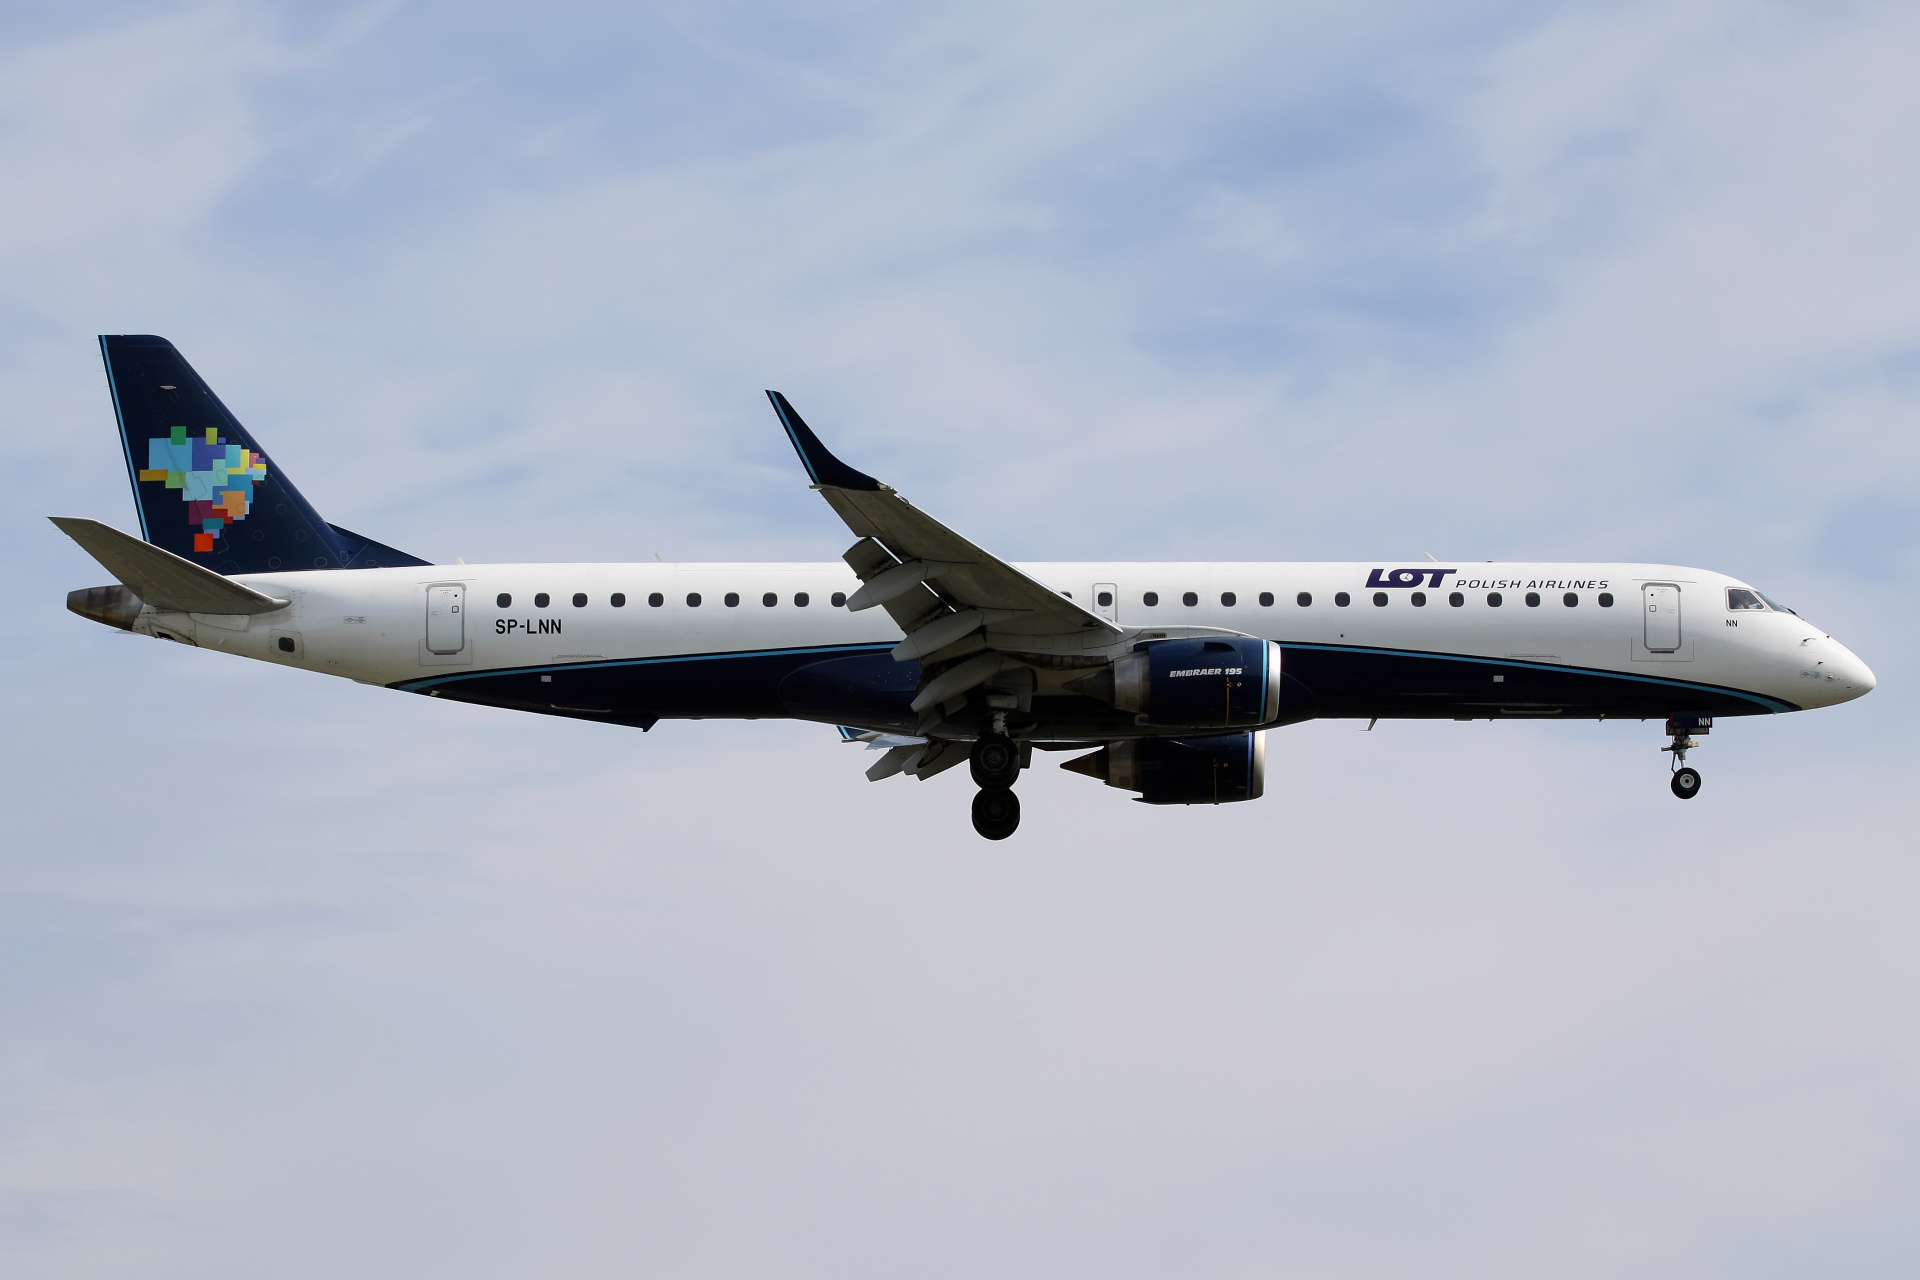 SP-LNN (Azul Brazilian Airlines) (Aircraft » EPWA Spotting » Embraer E195 » LOT Polish Airlines)